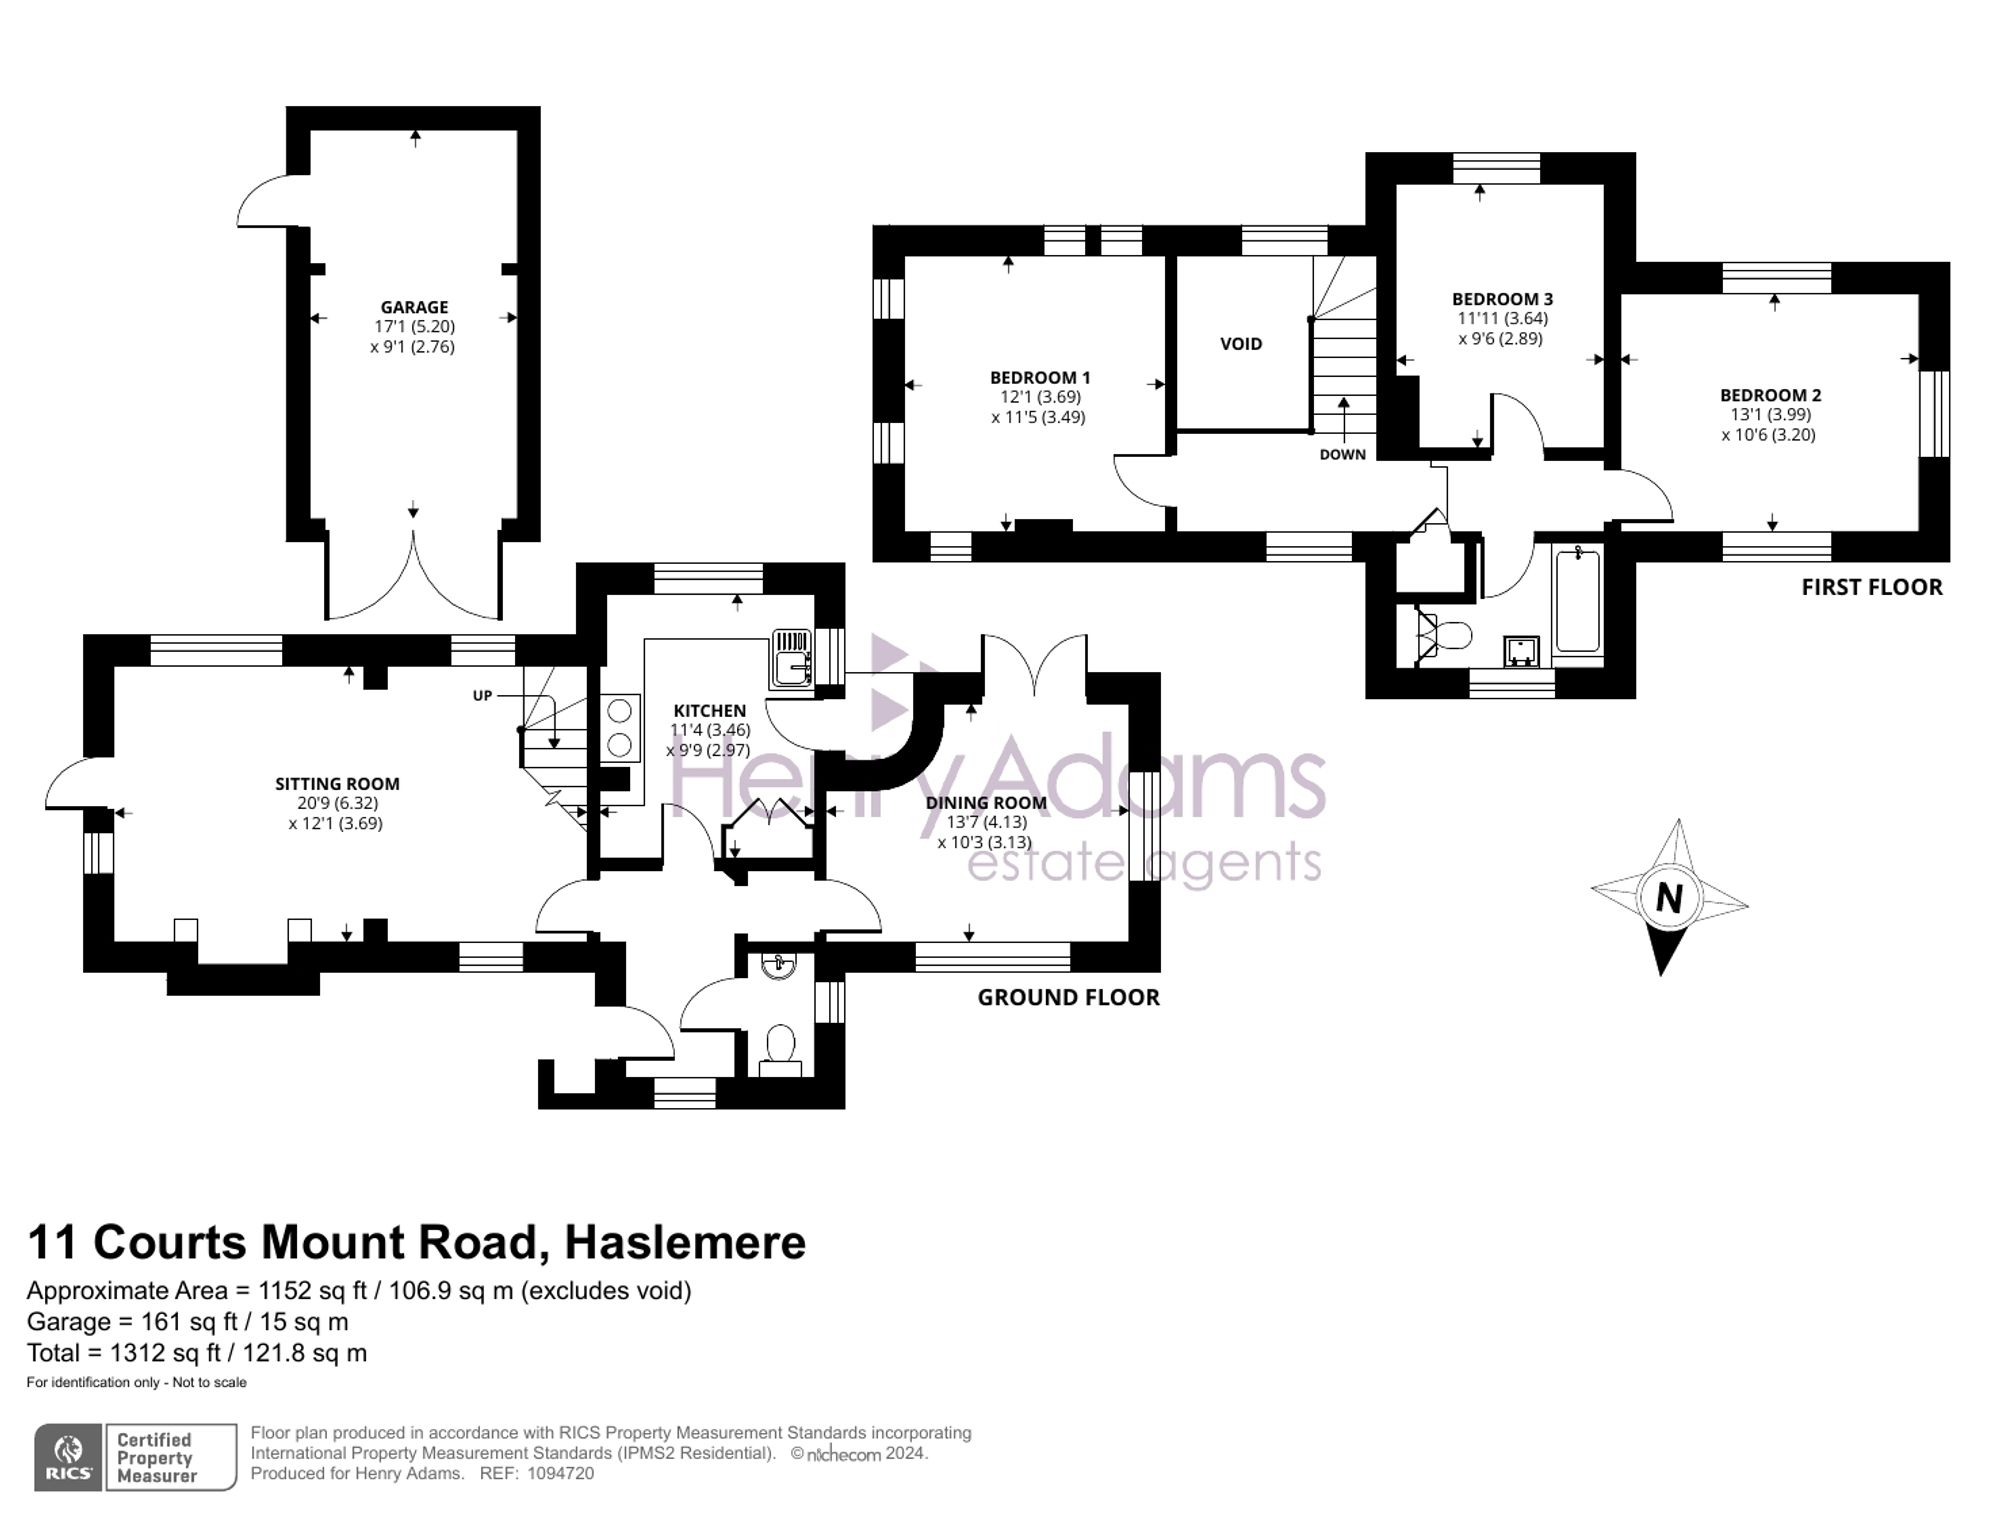 Courts Mount Road, Haslemere, GU27 floorplans